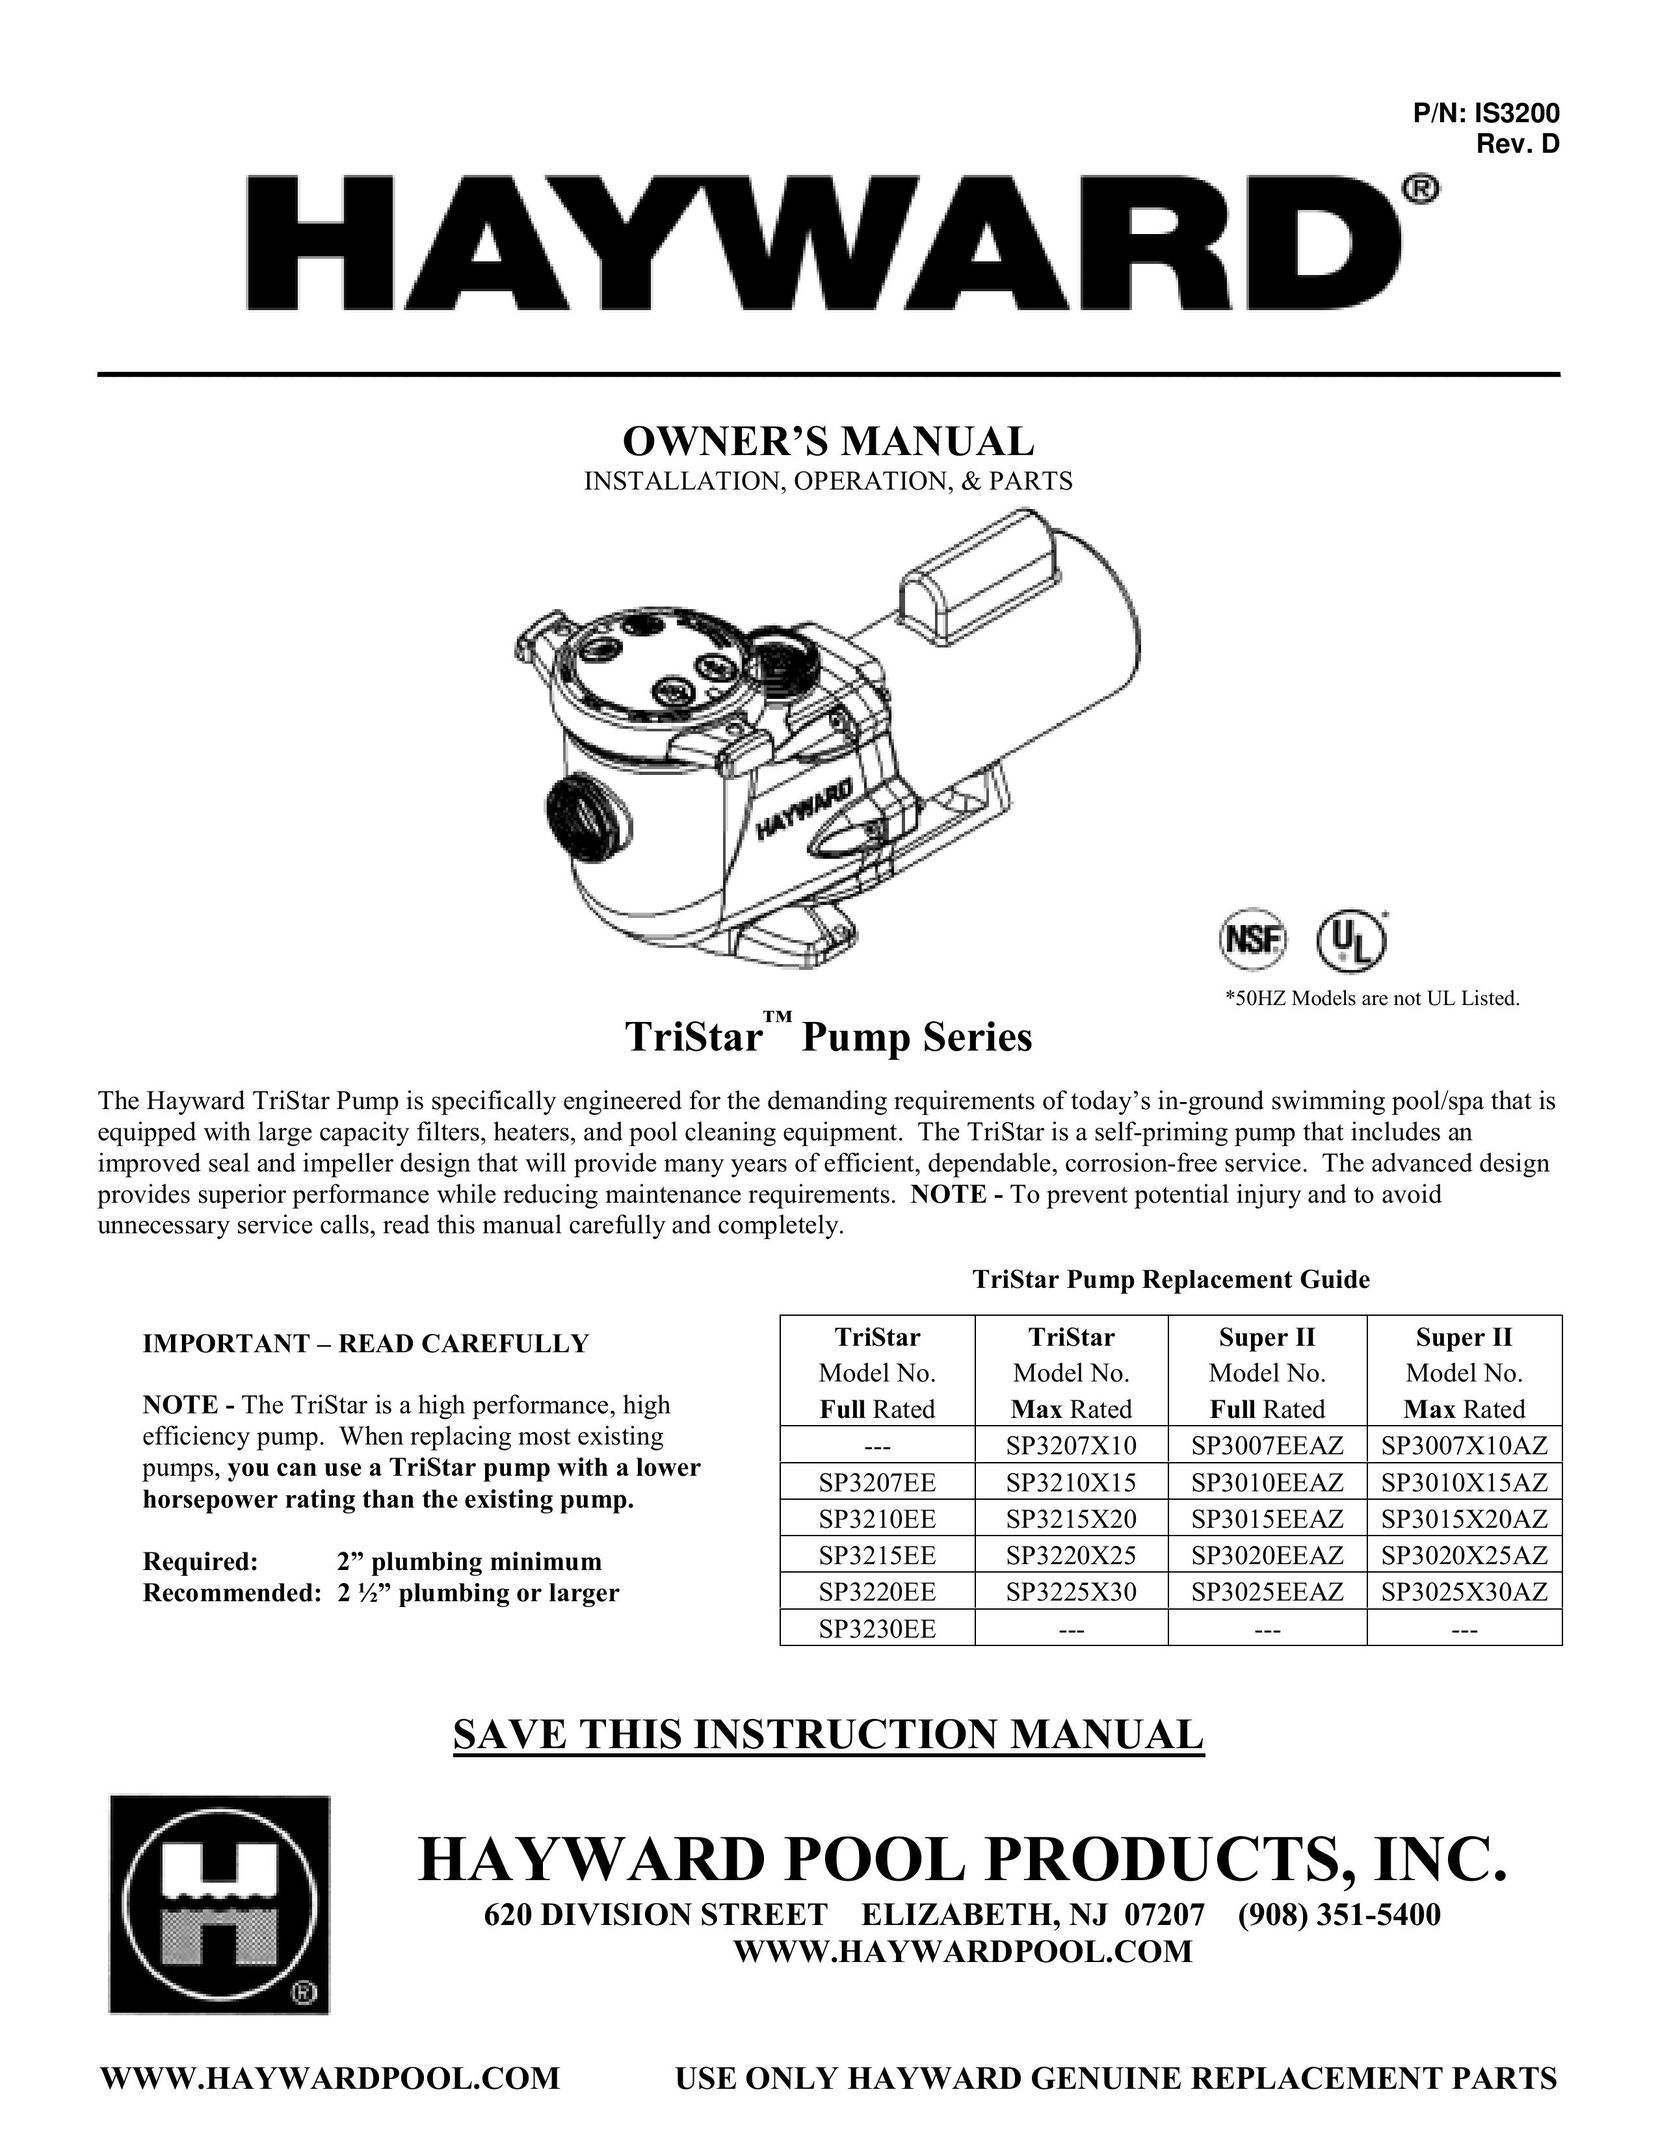 TriStar SP3210EE Heat Pump User Manual